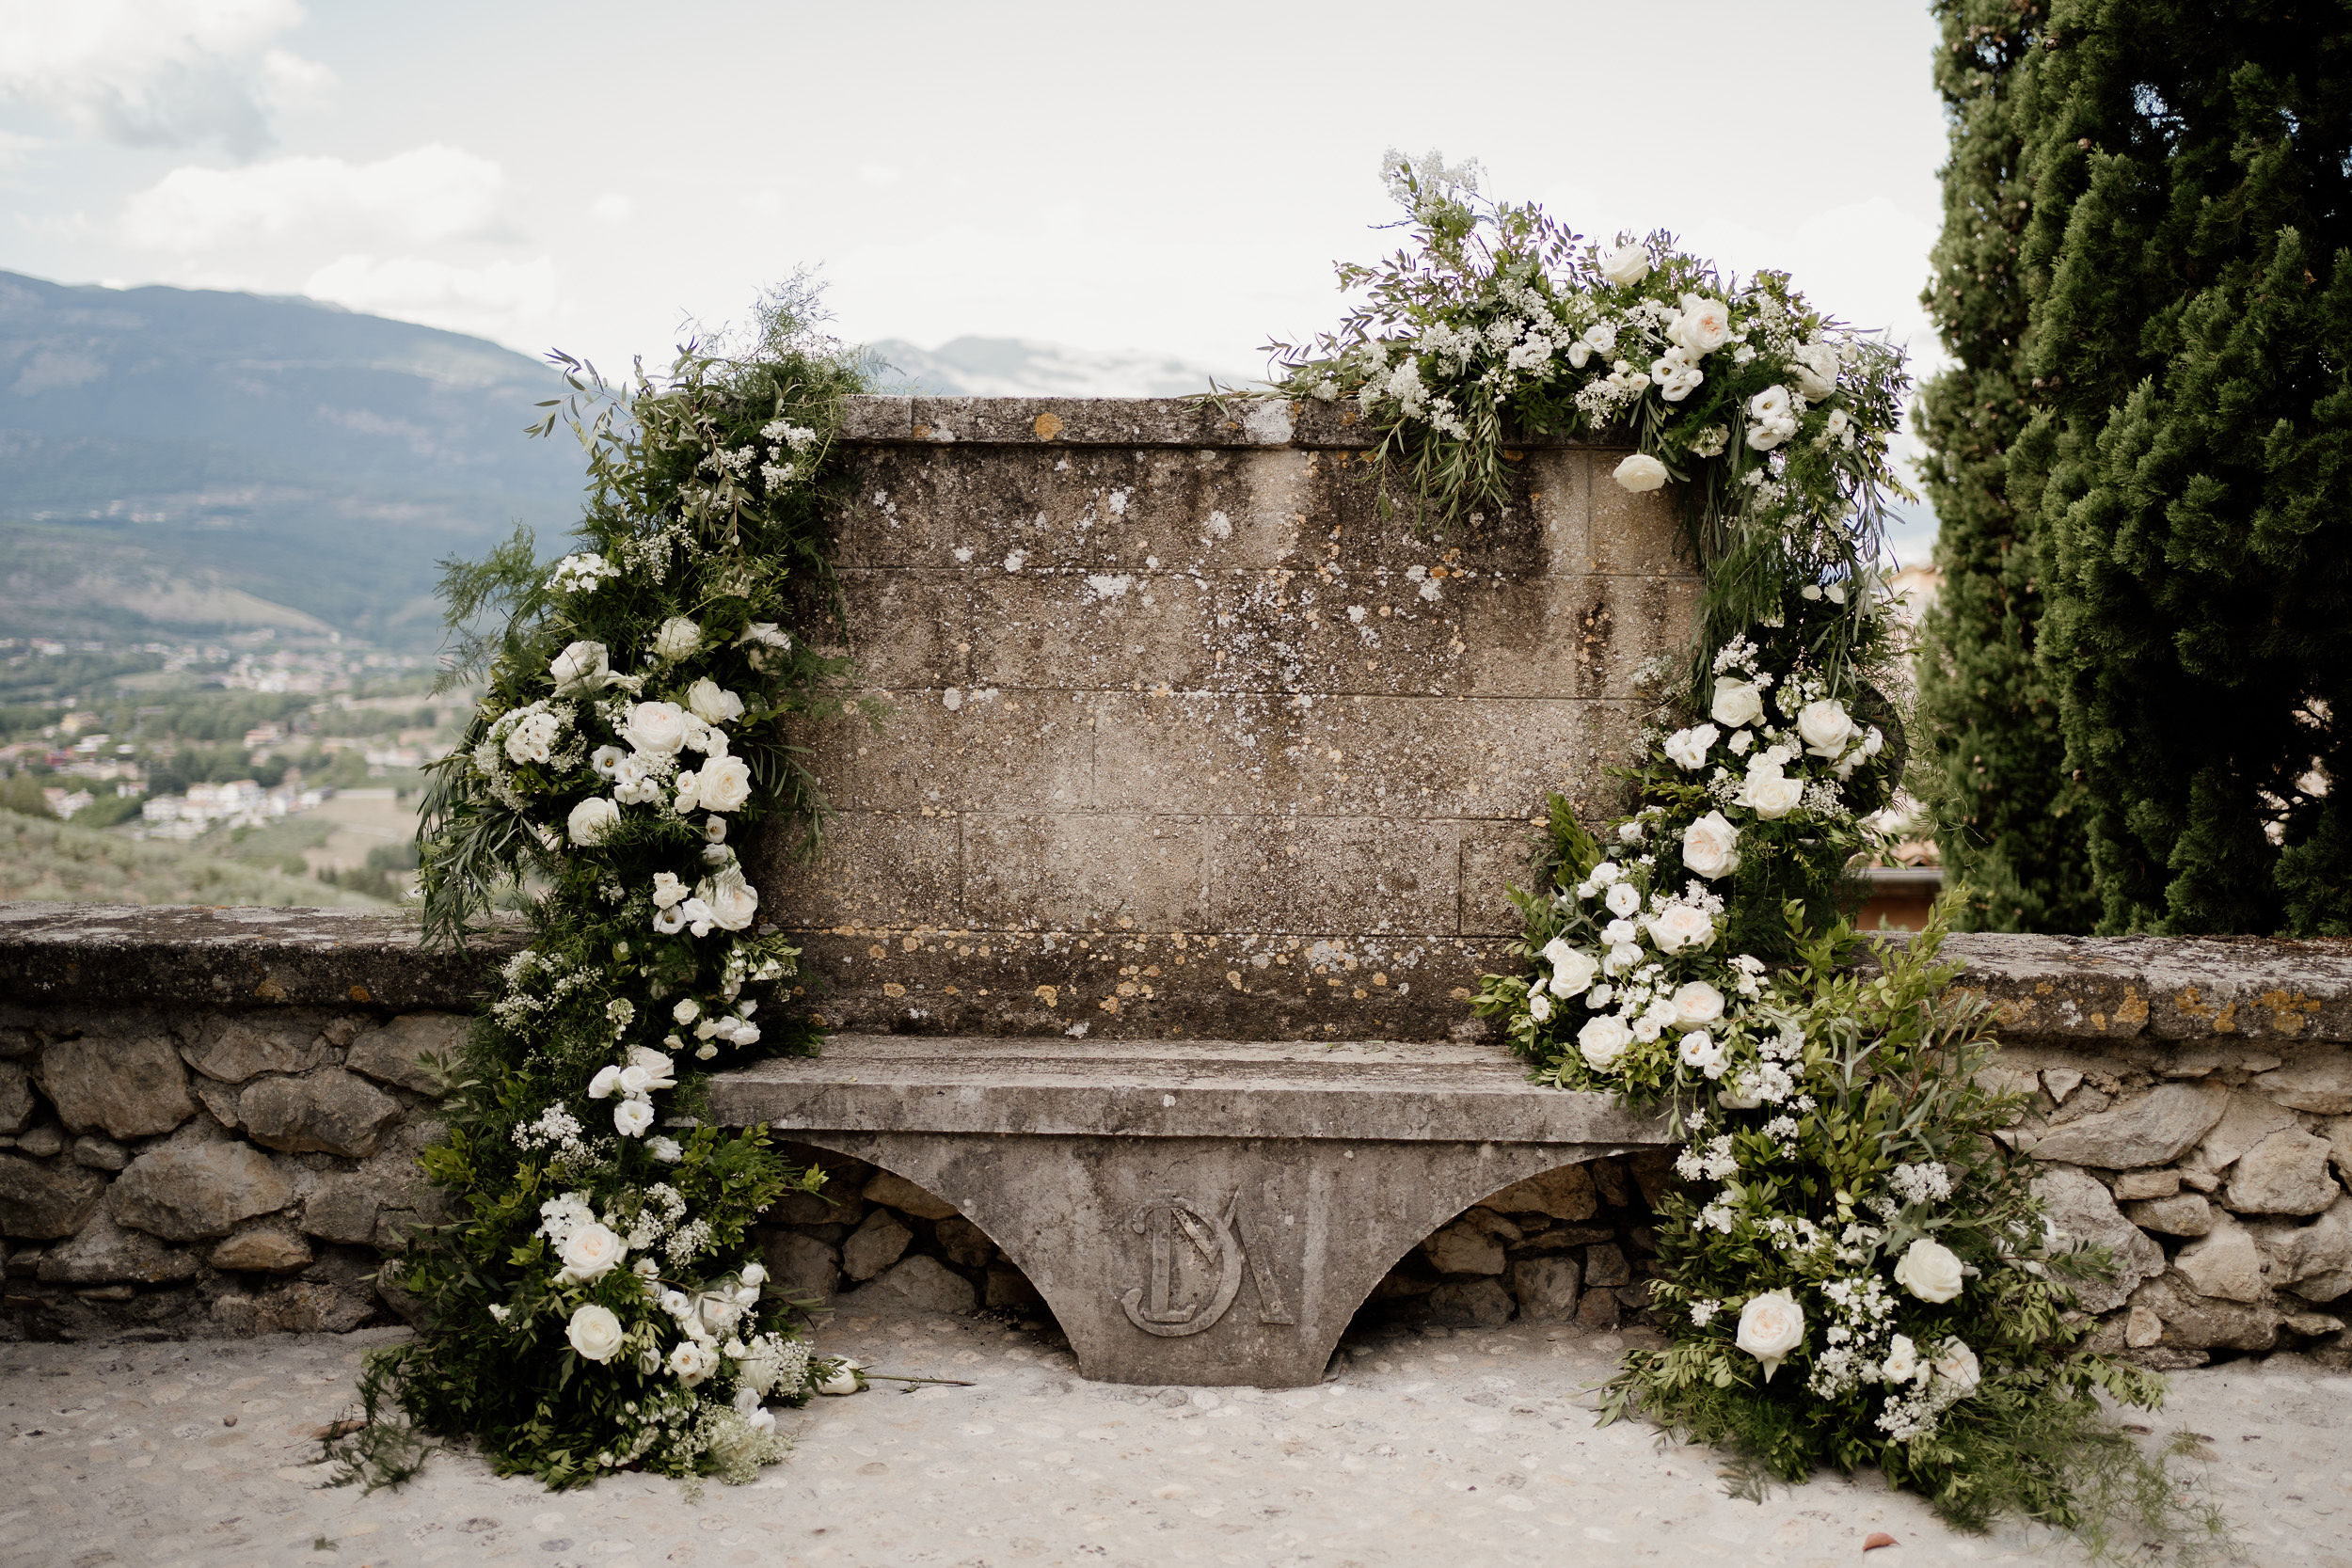 Decorazione floreale in stile botanico su antica seduta in pietra